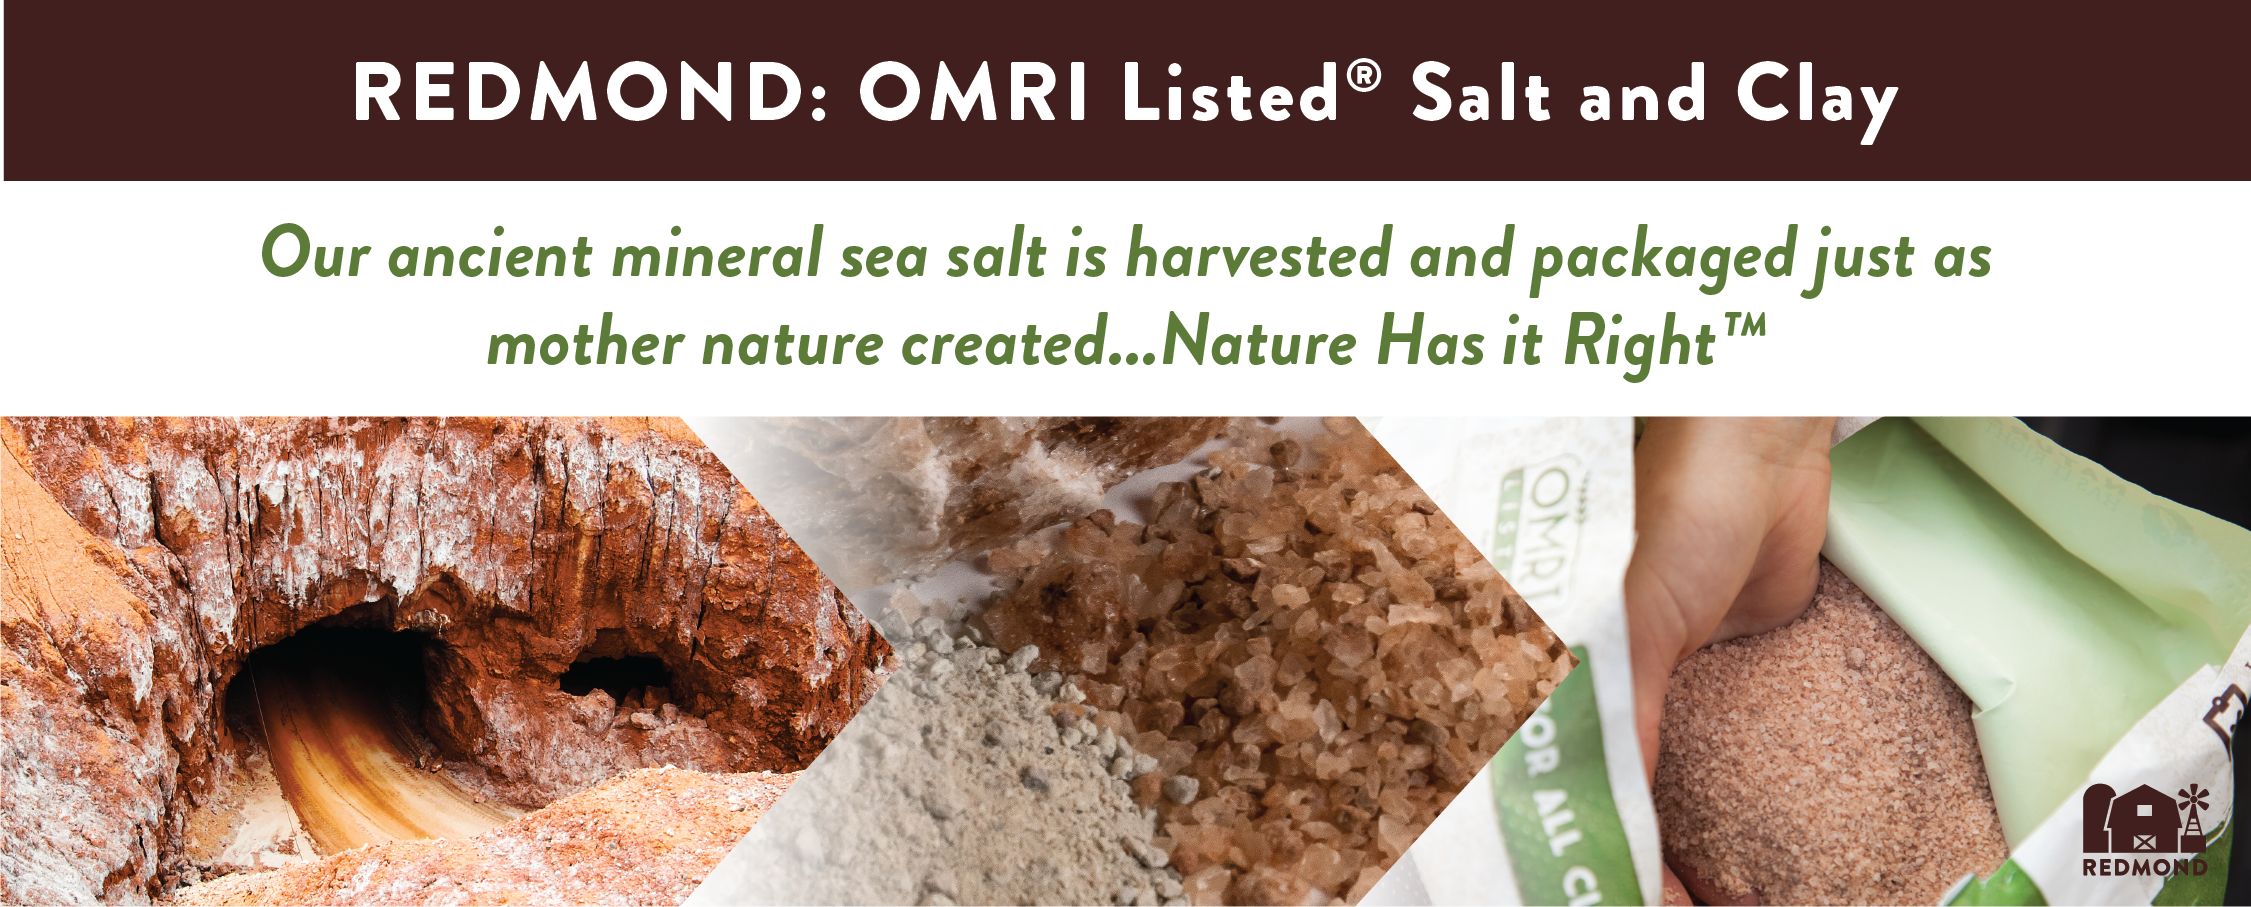 Redmond OMRI listed salt and clay